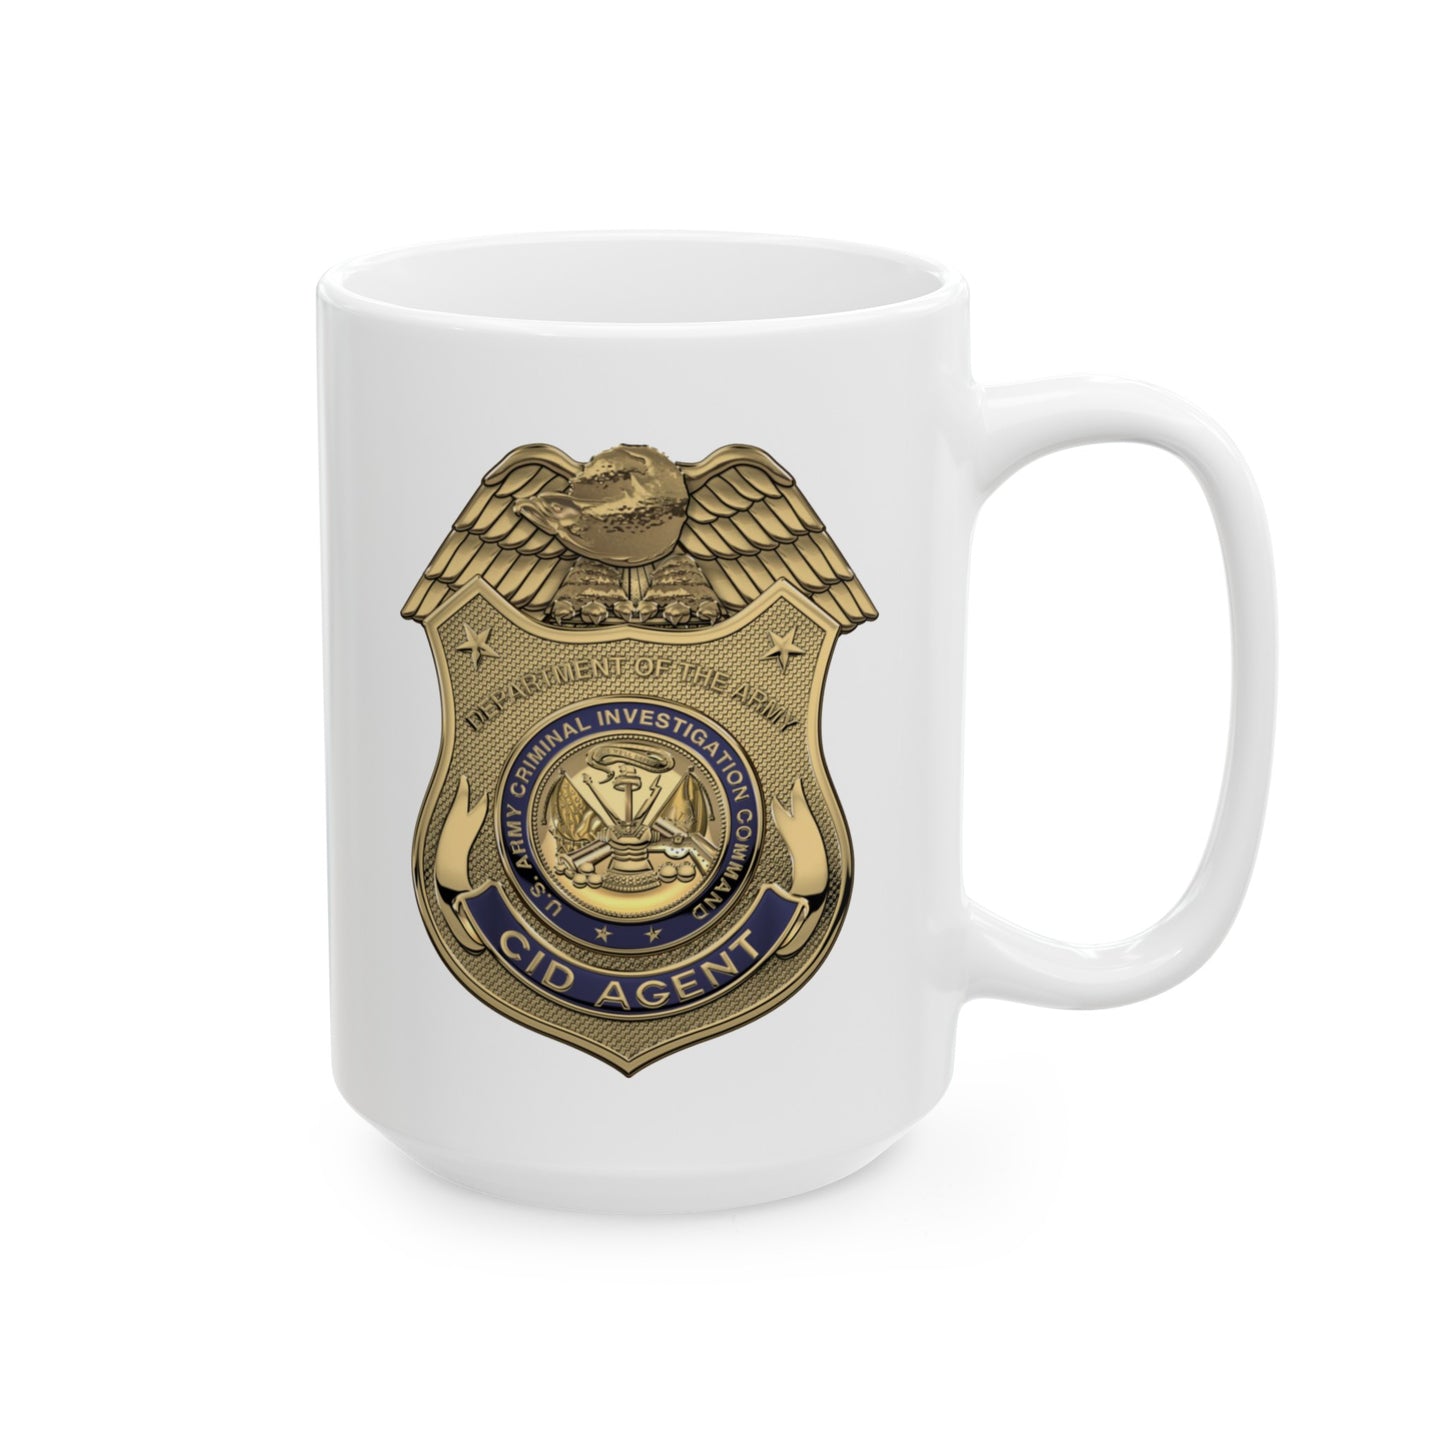 Army CID Agent Badge Coffee Mug - Double Sided White Ceramic 15oz by TheGlassyLass.com